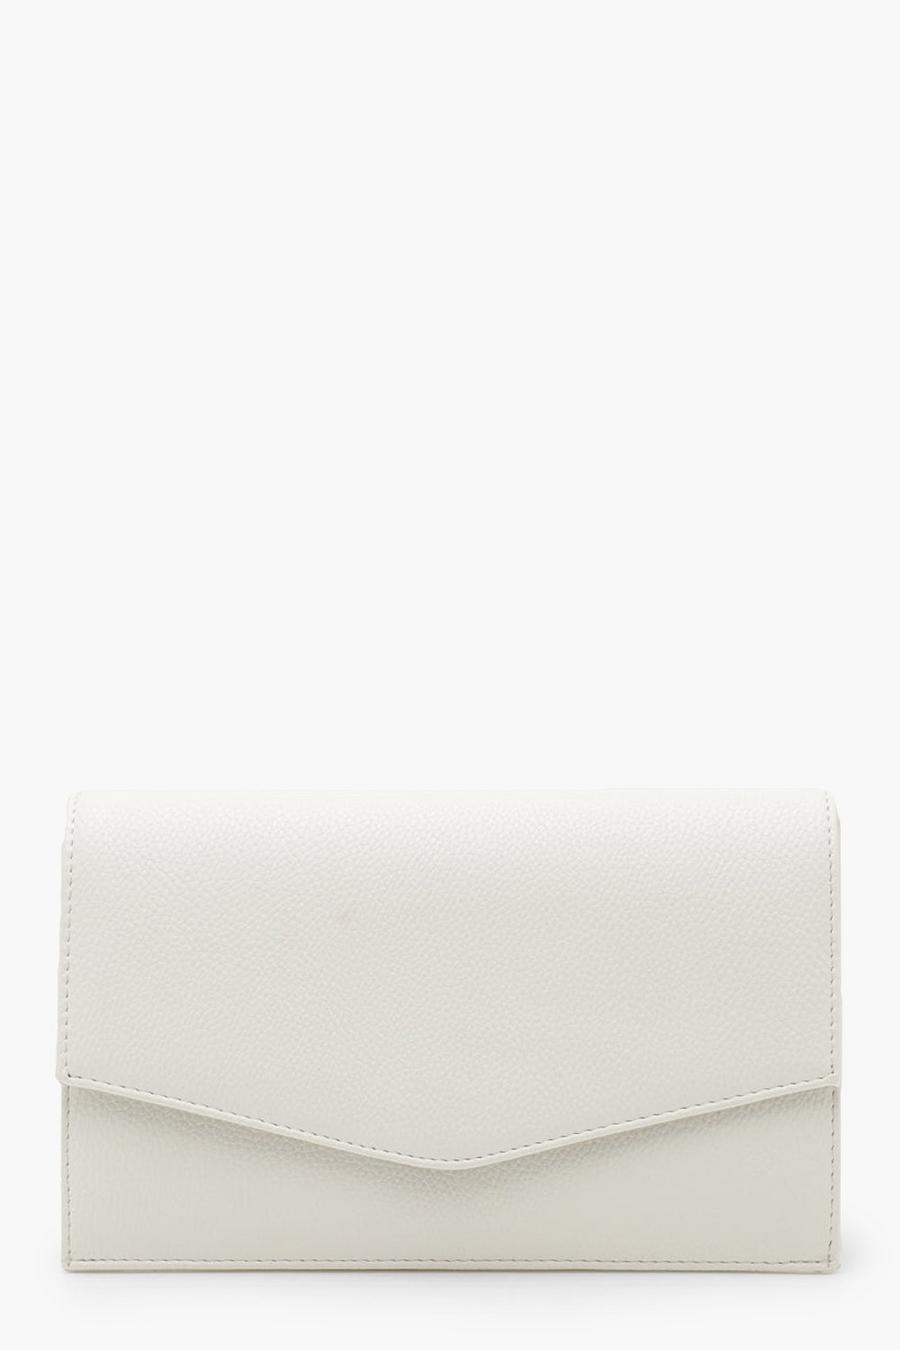 White blanc Grainy PU Envelope Clutch Bag and Chain